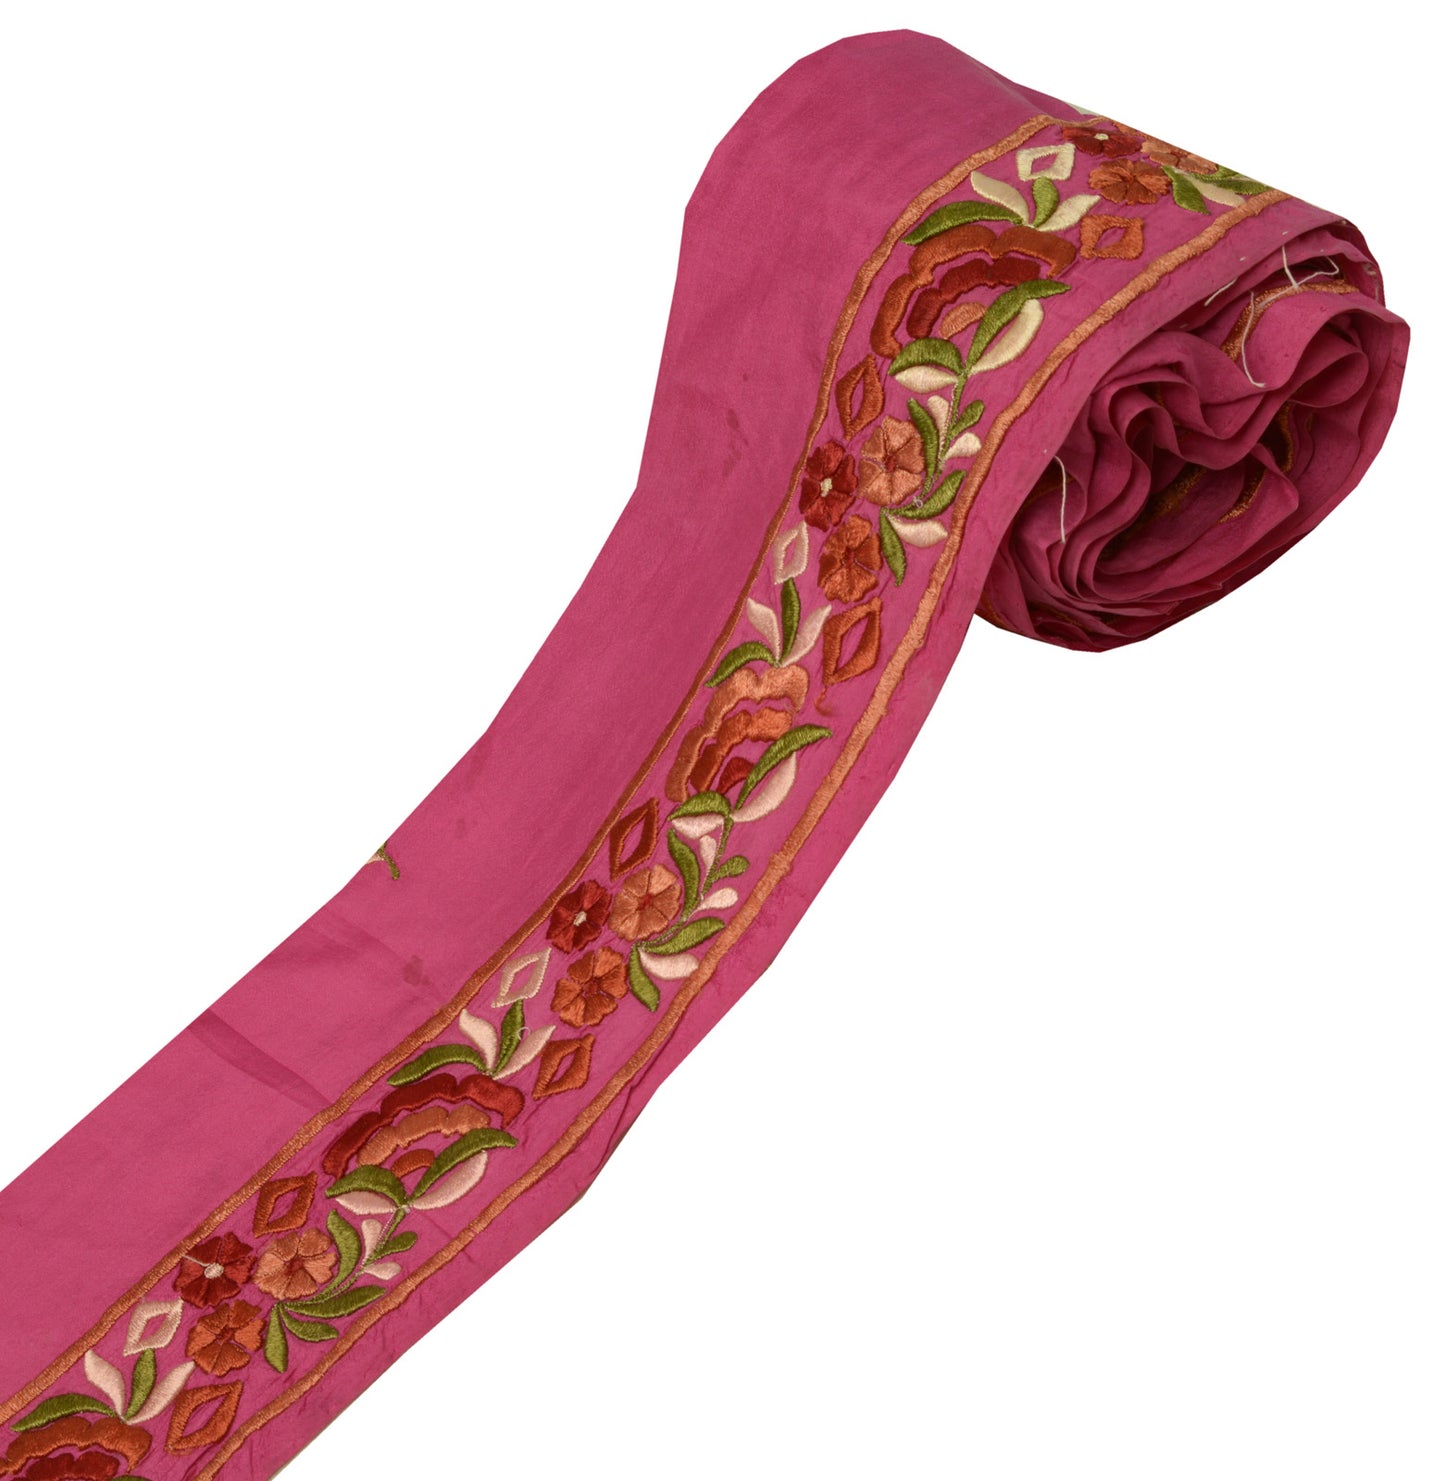 Sushila Vintage Hot Pink Sari Border Craft Sewing Trim Embroidered Lace Ribbon